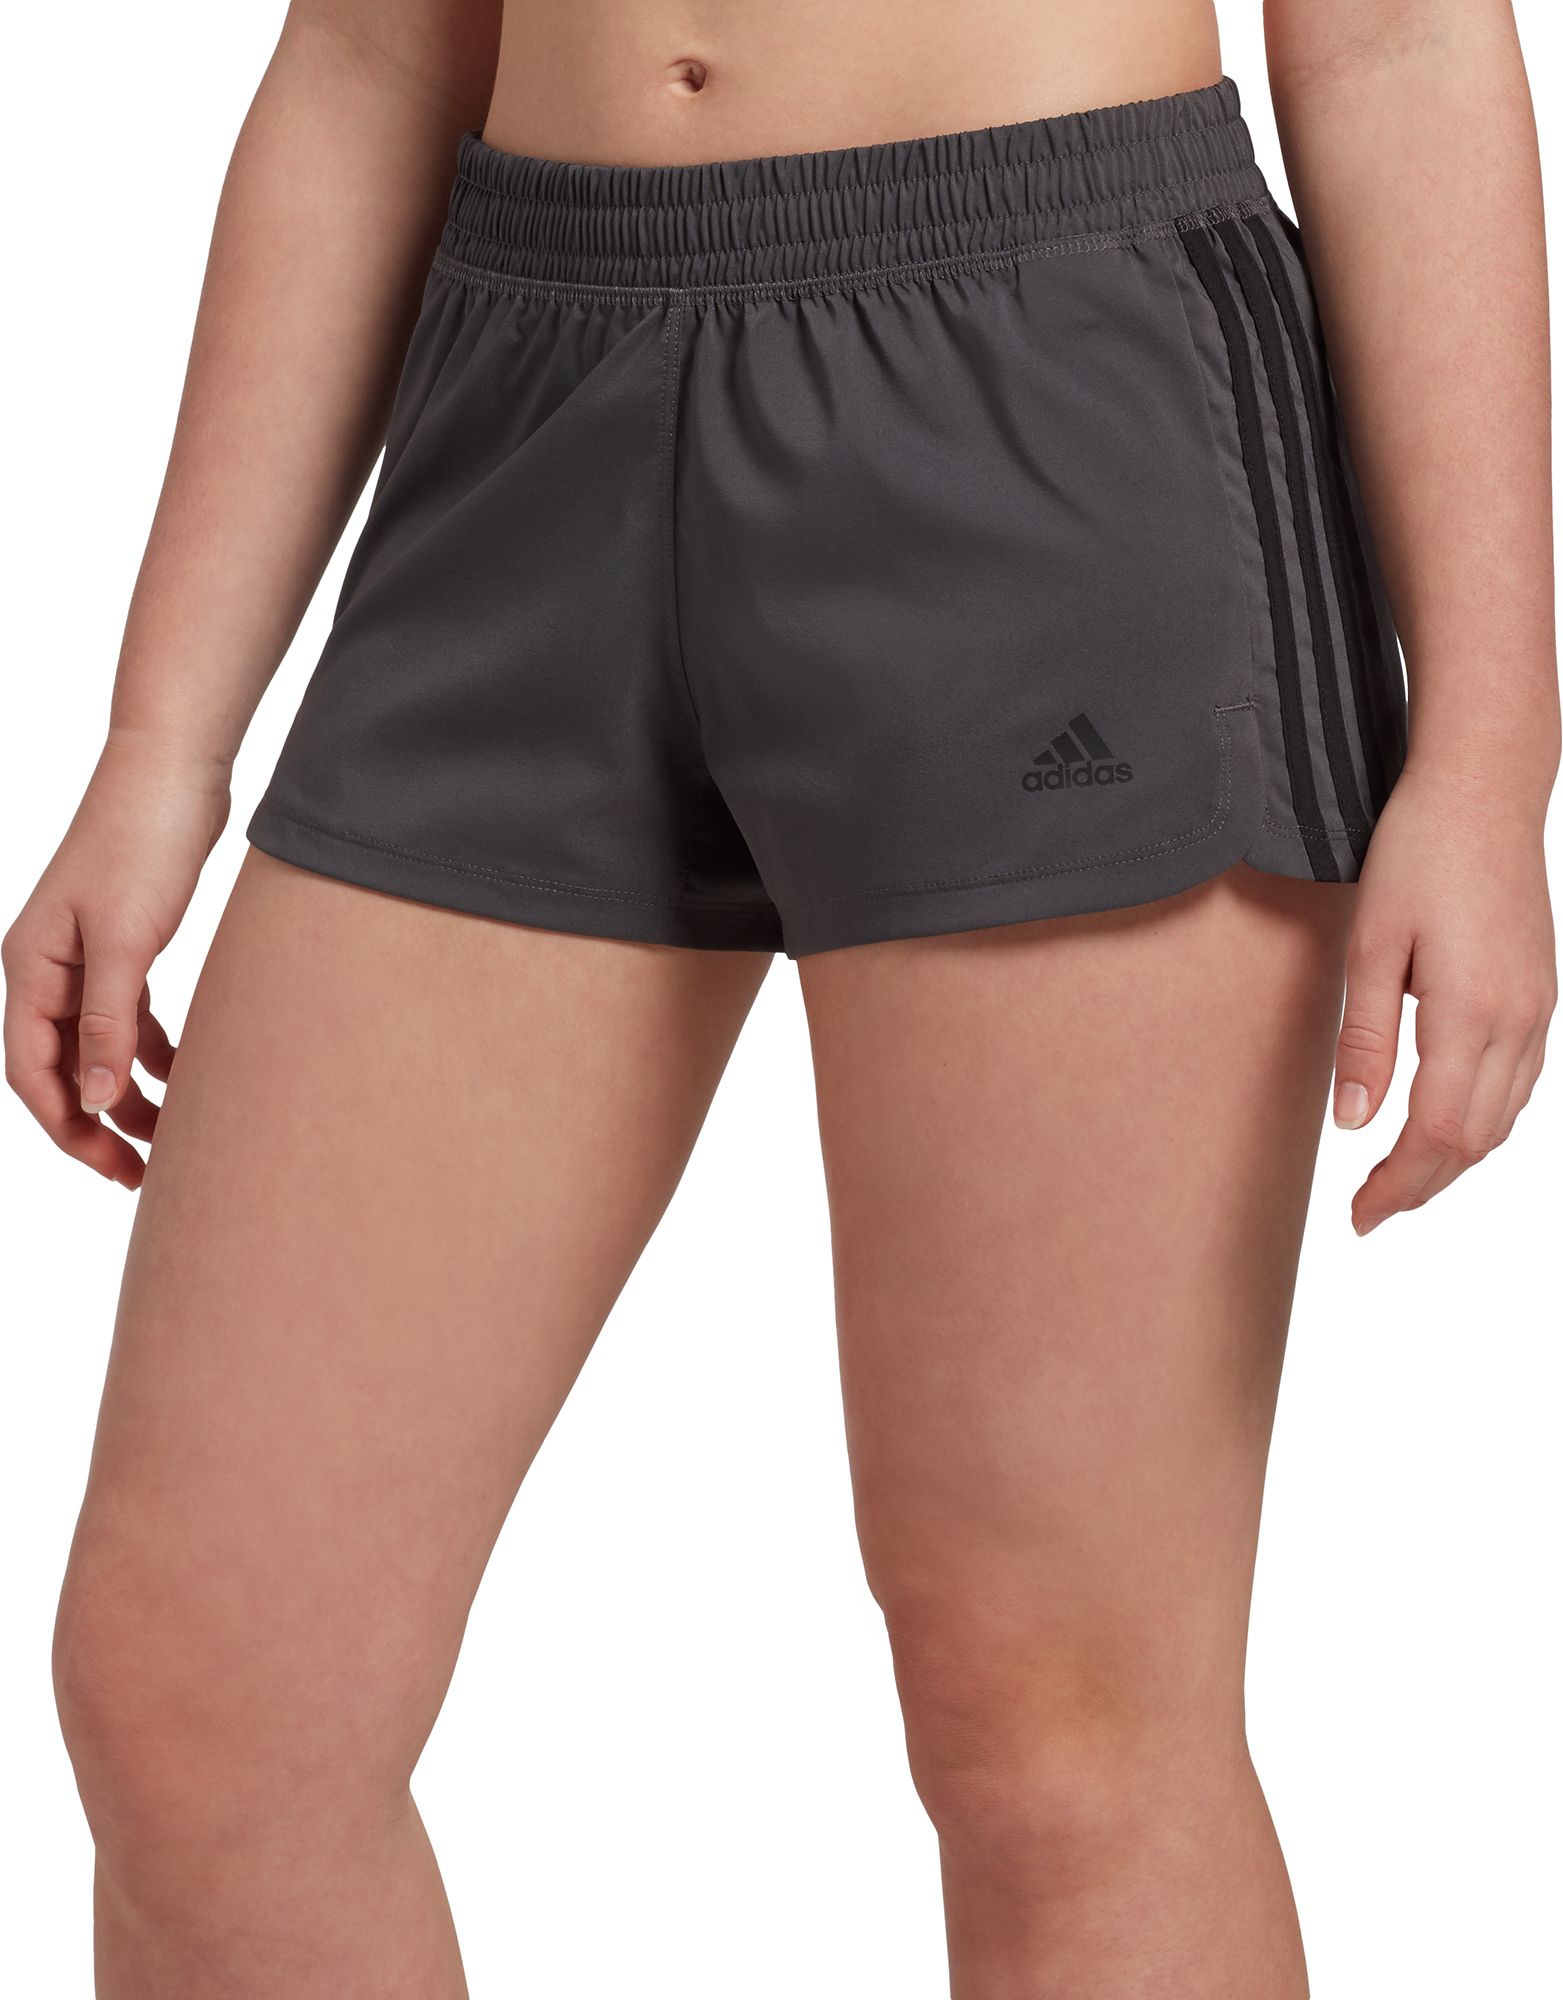 adidas women's shorts climalite